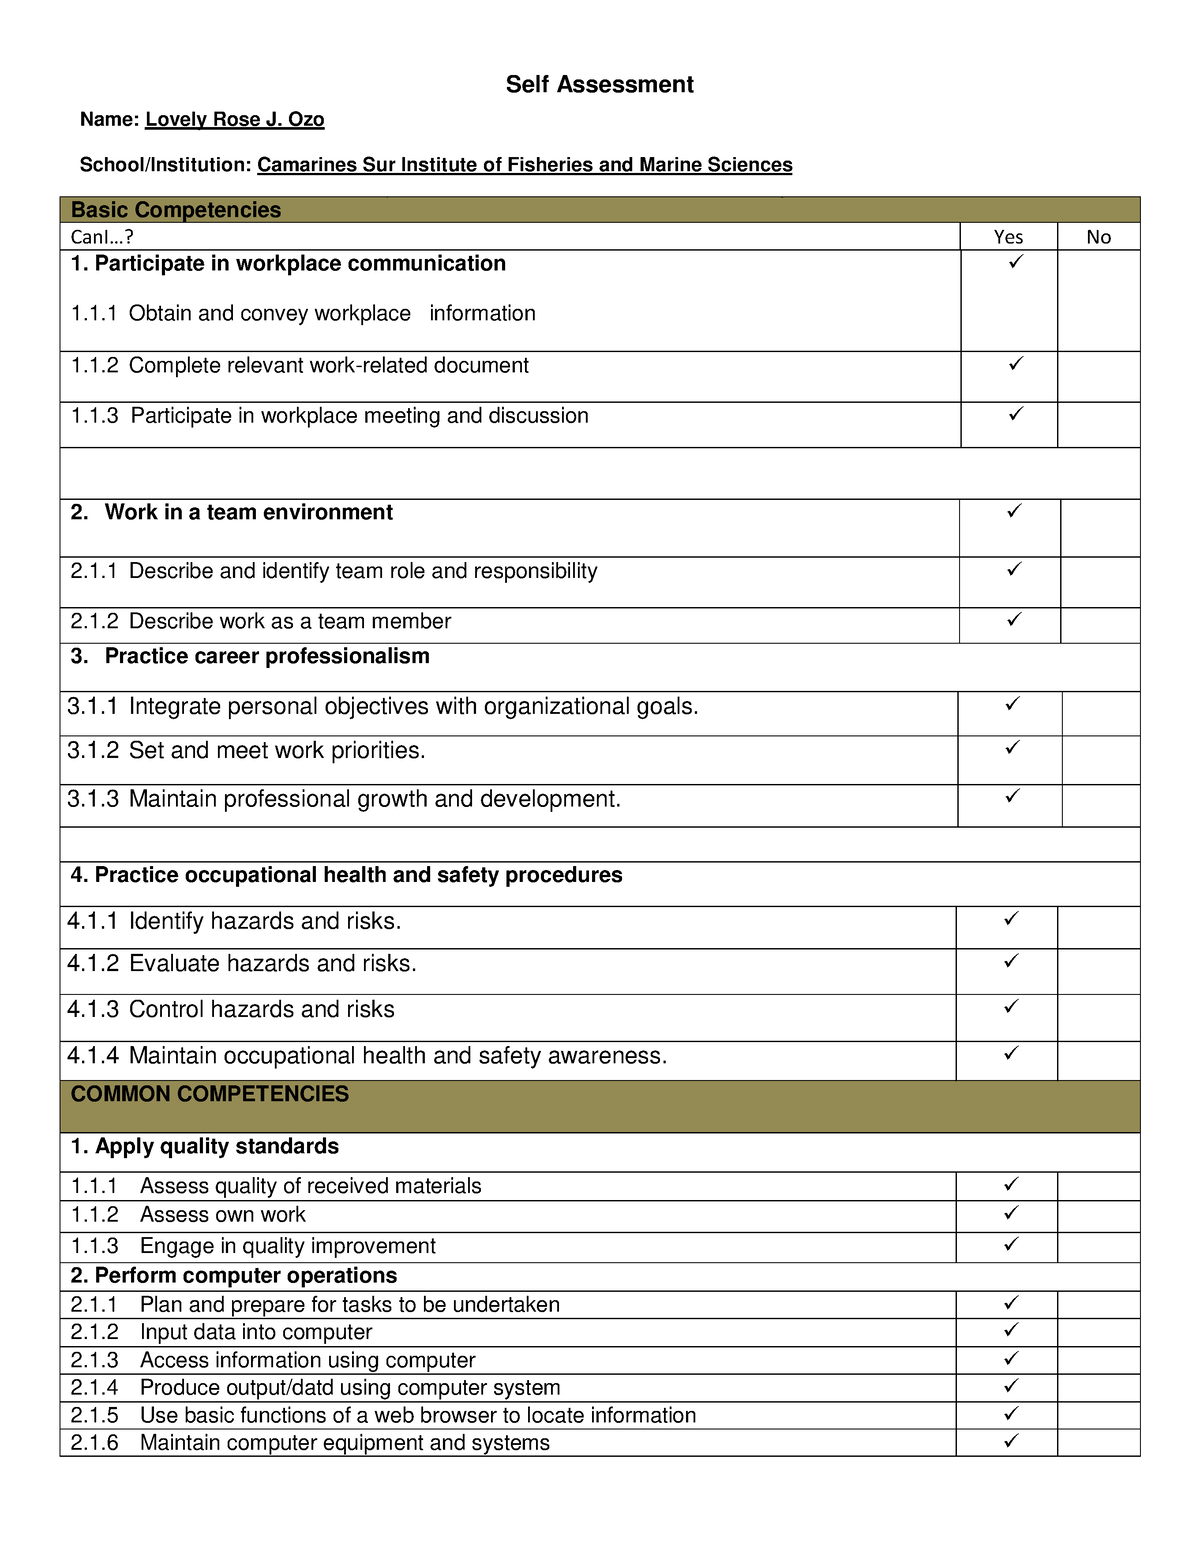 Tm1 core 3 tasksheet -3 - Self Assessment Basic Competencies CanI ...